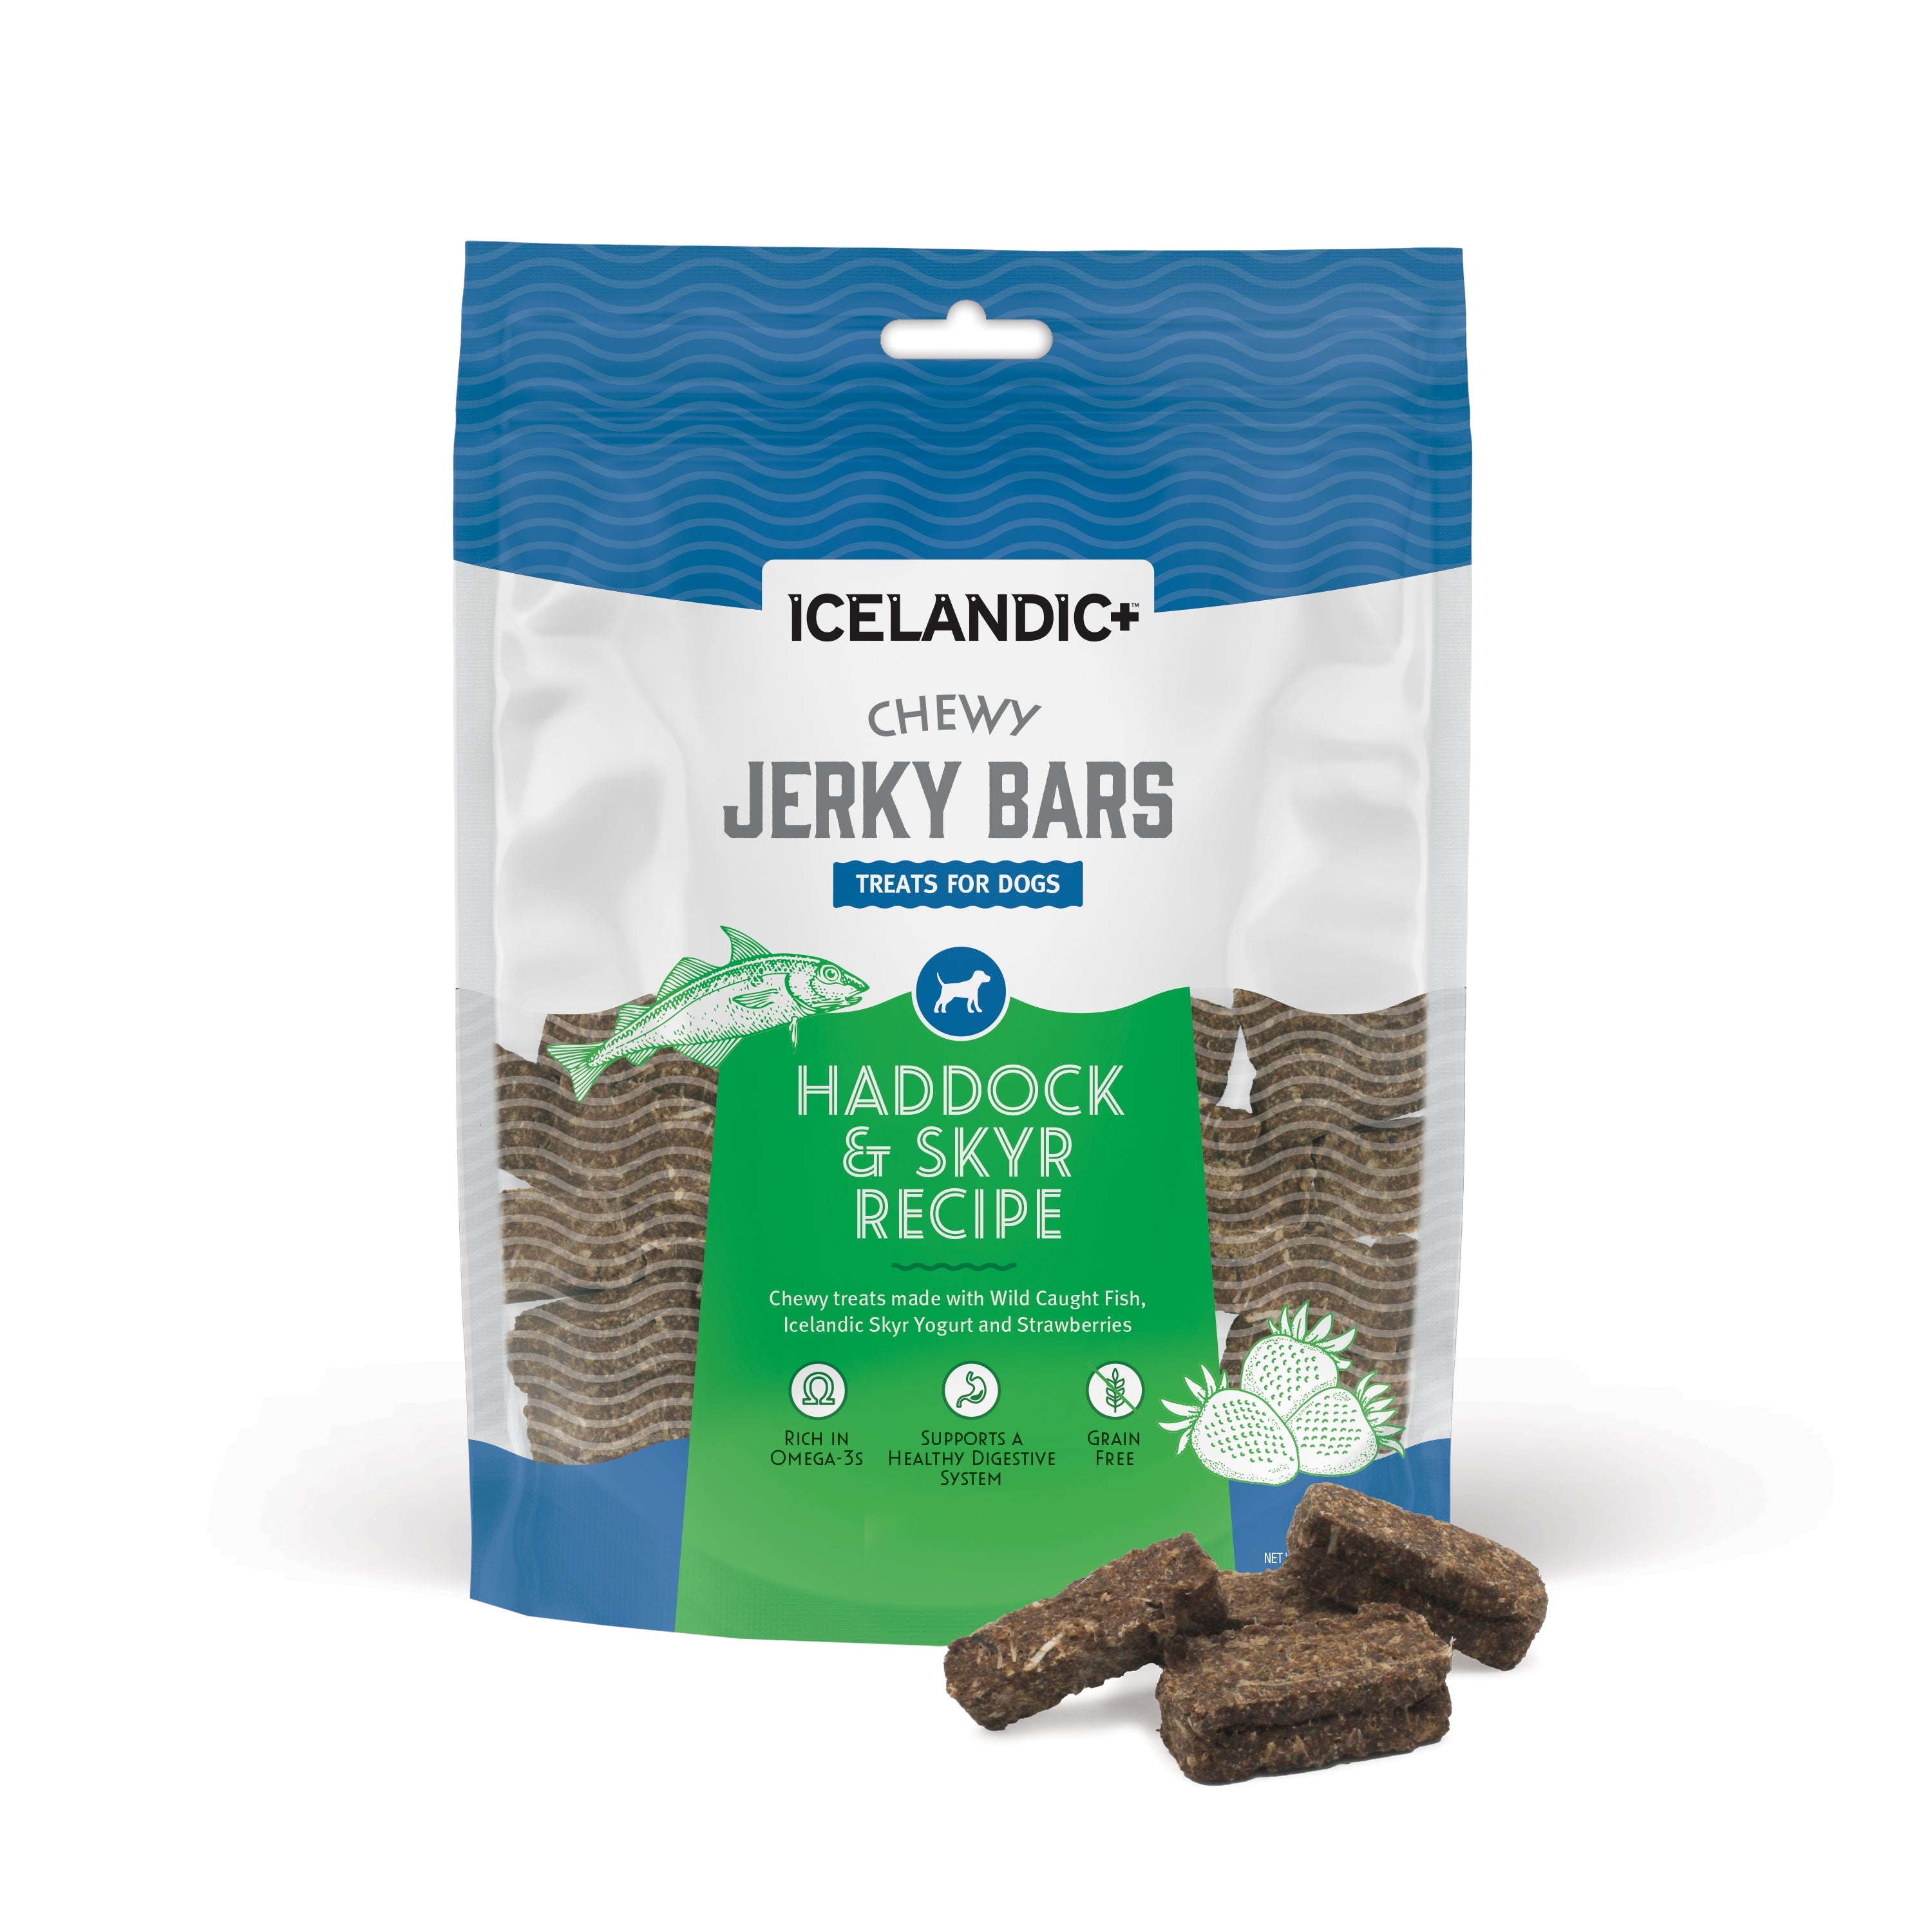 Icelandic+ Jerky Bars Haddock & Skyr Recipe Soft Dog Treats, 2.5oz